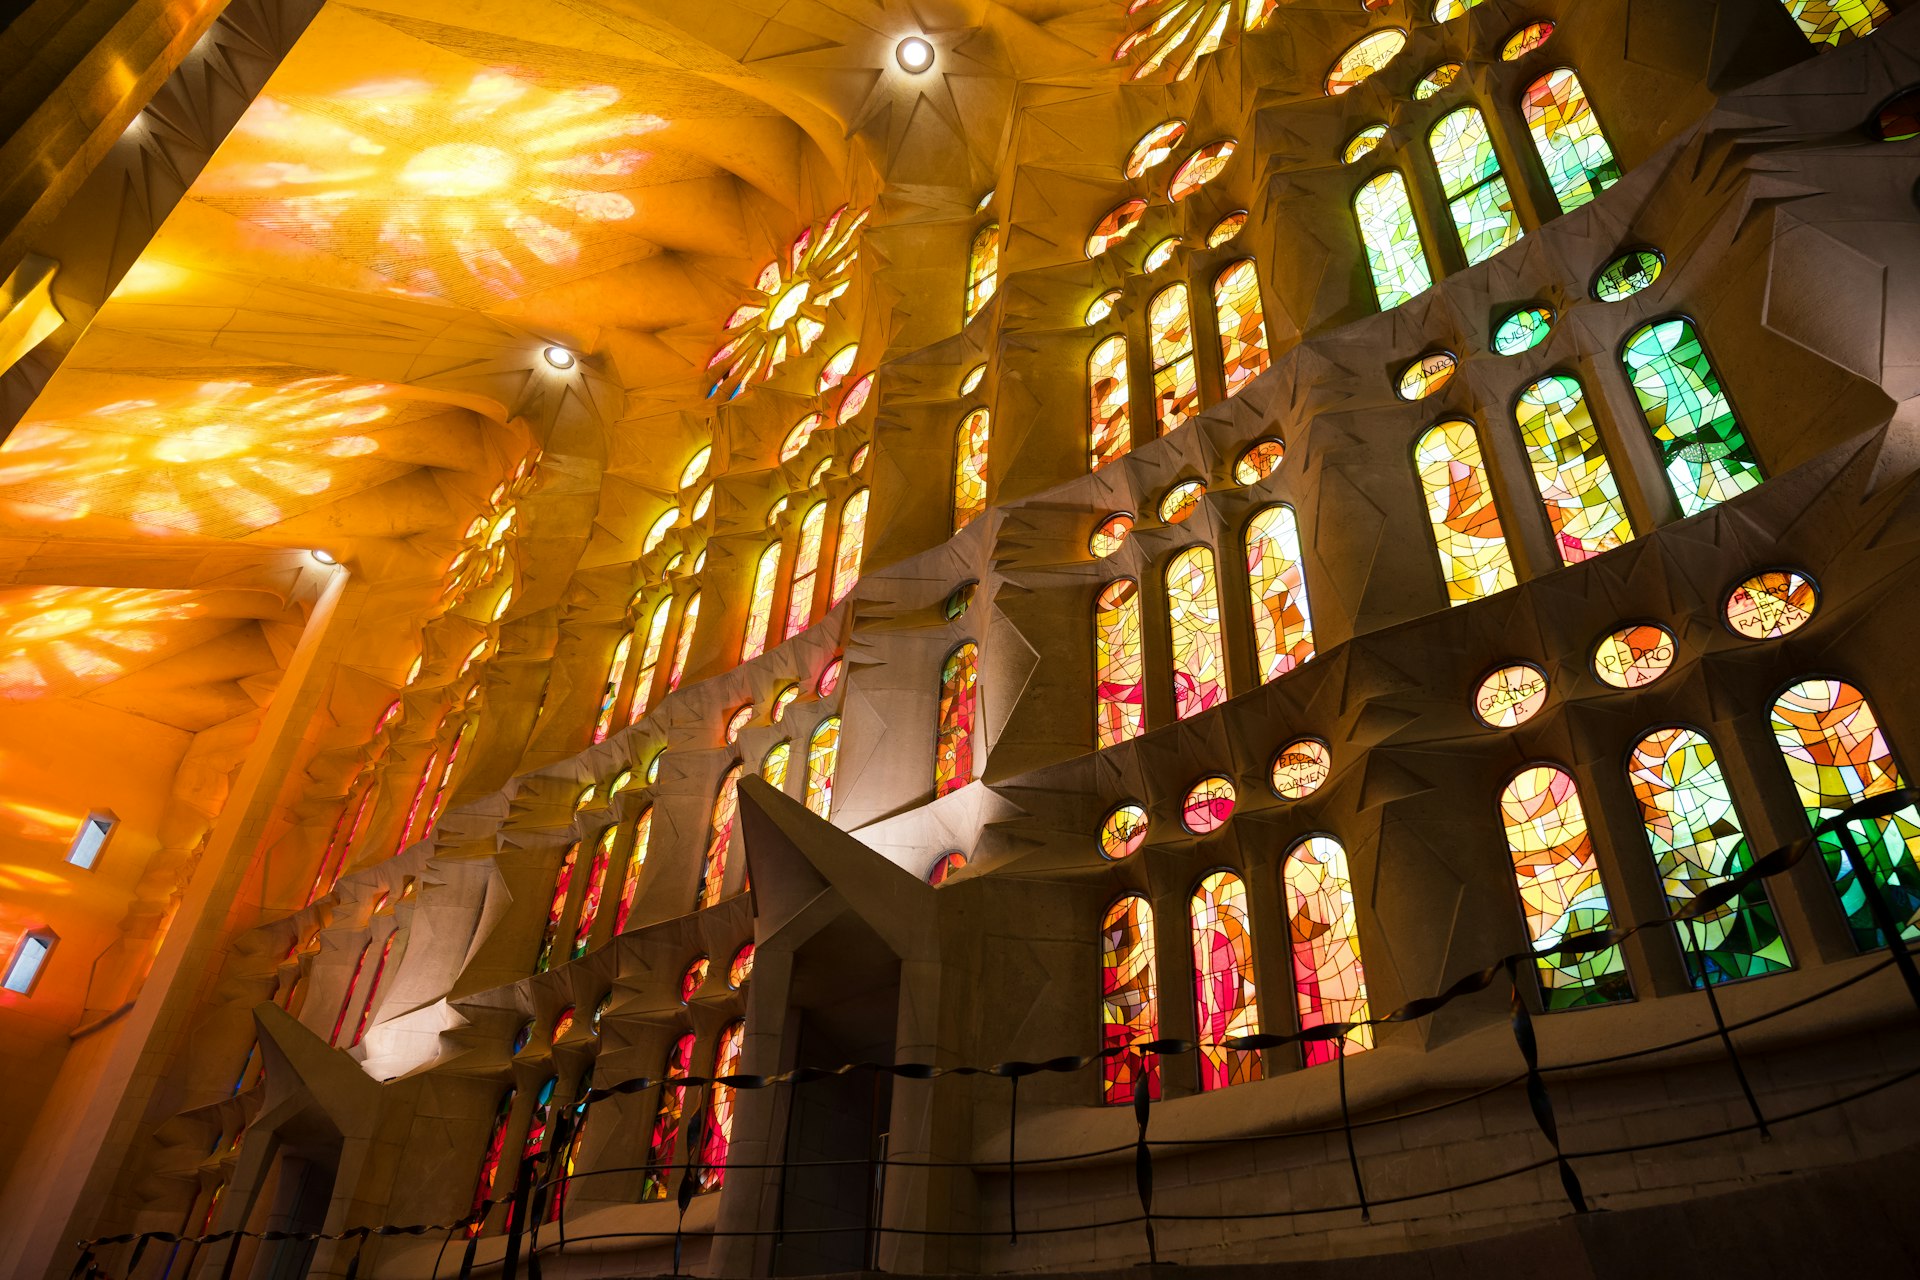 An interior view of the La Sagrada Familia with the light illuminating its stain glass windows